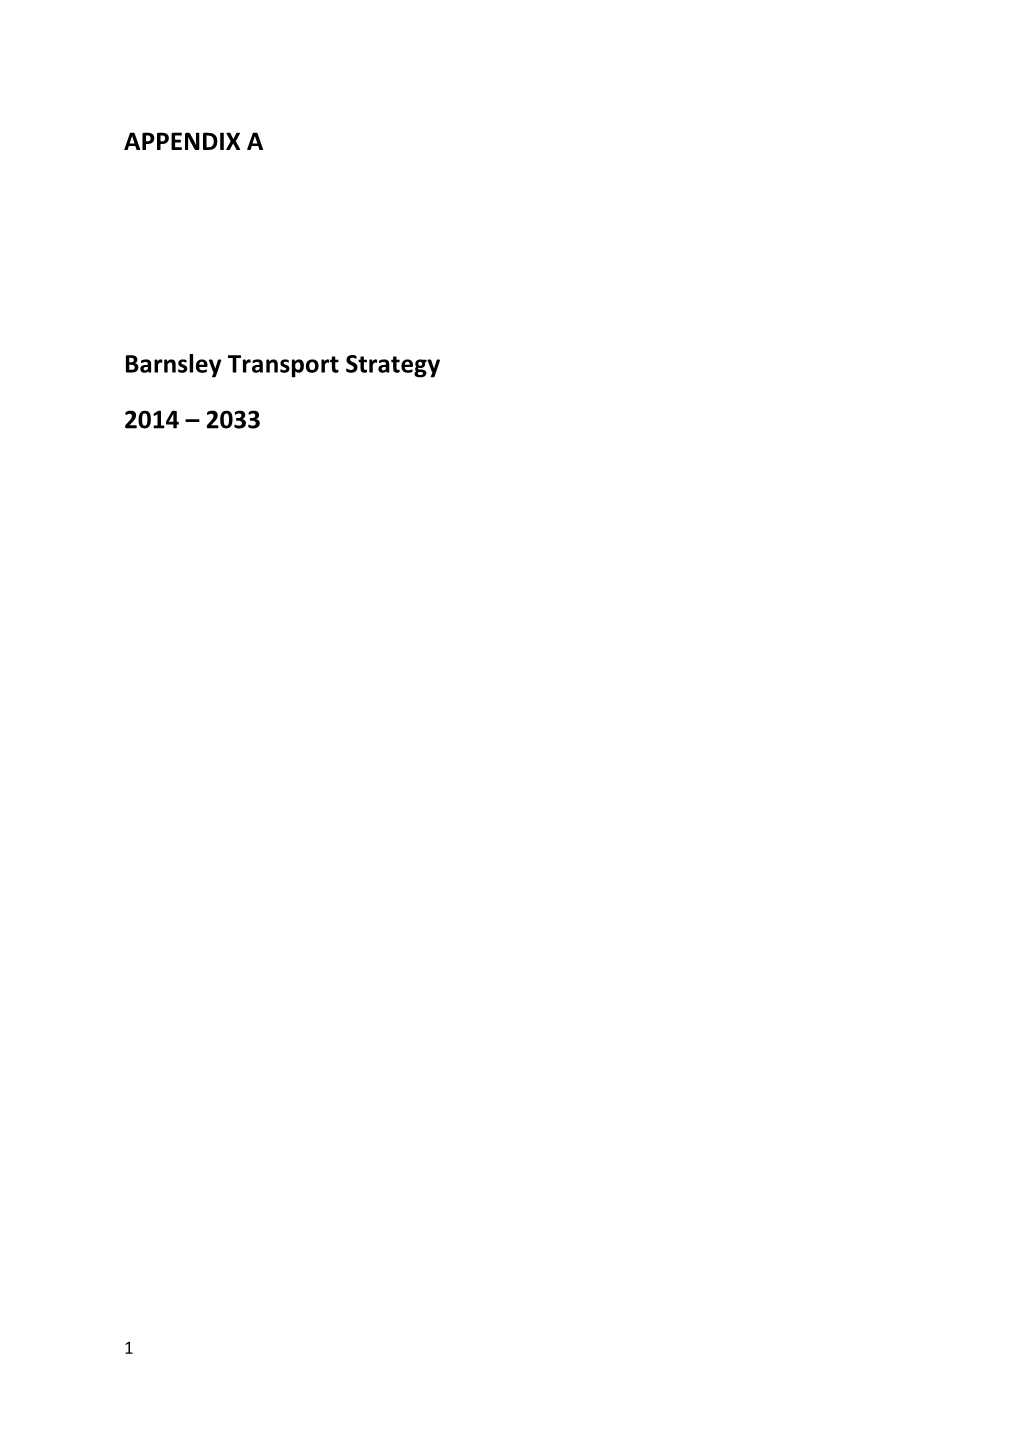 Transport Strategy 2014-2033